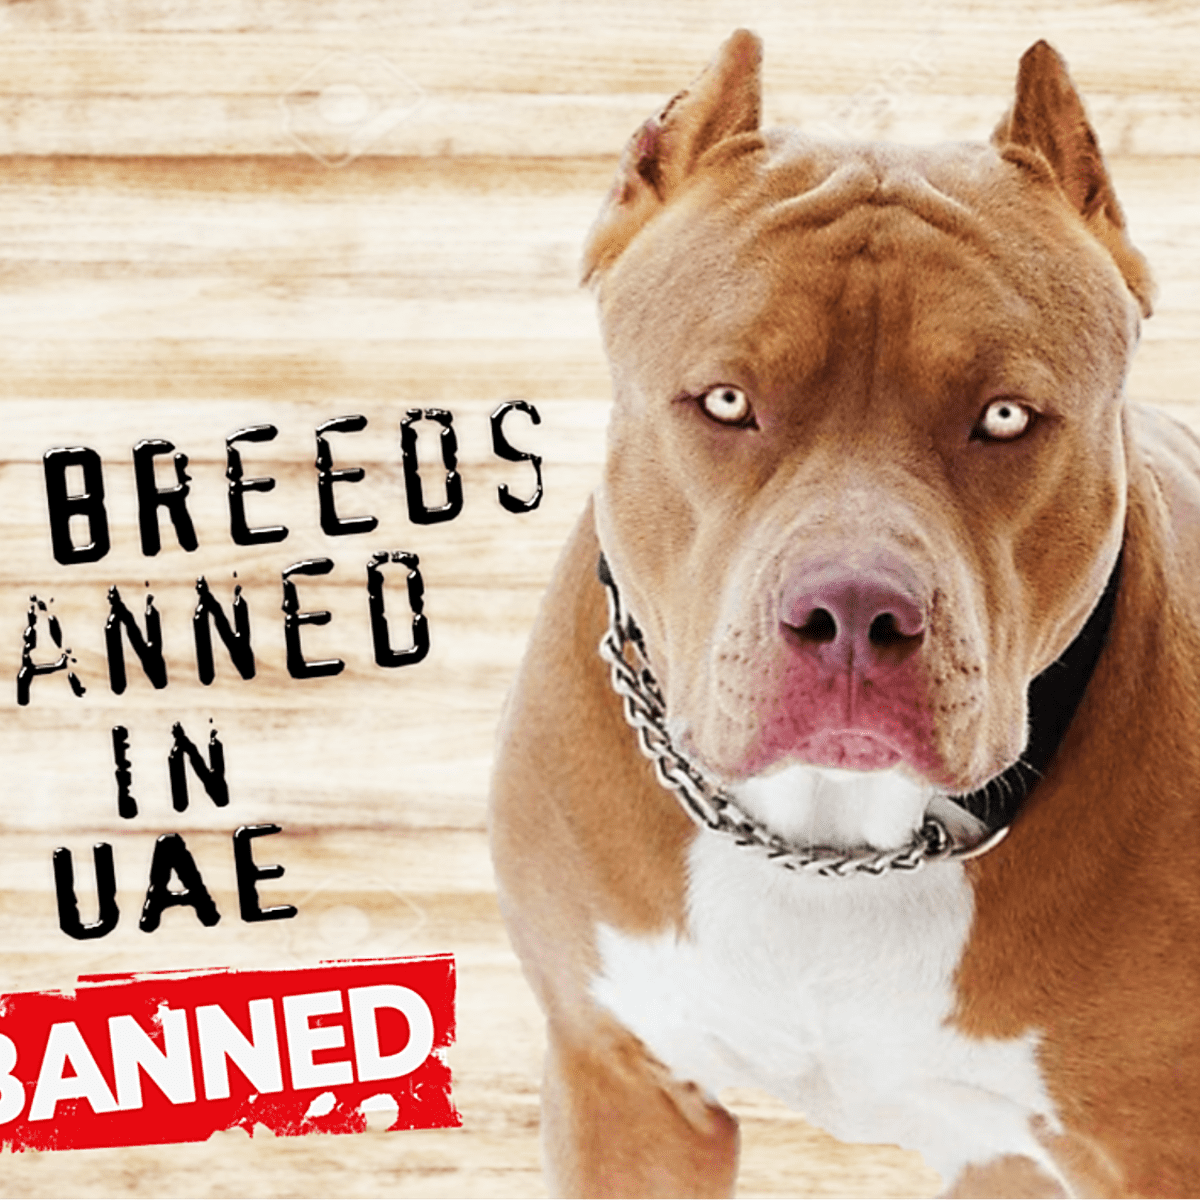 11 Dog Breeds Banned or Restricted In UAE (United Arab Emirates) - HubPages